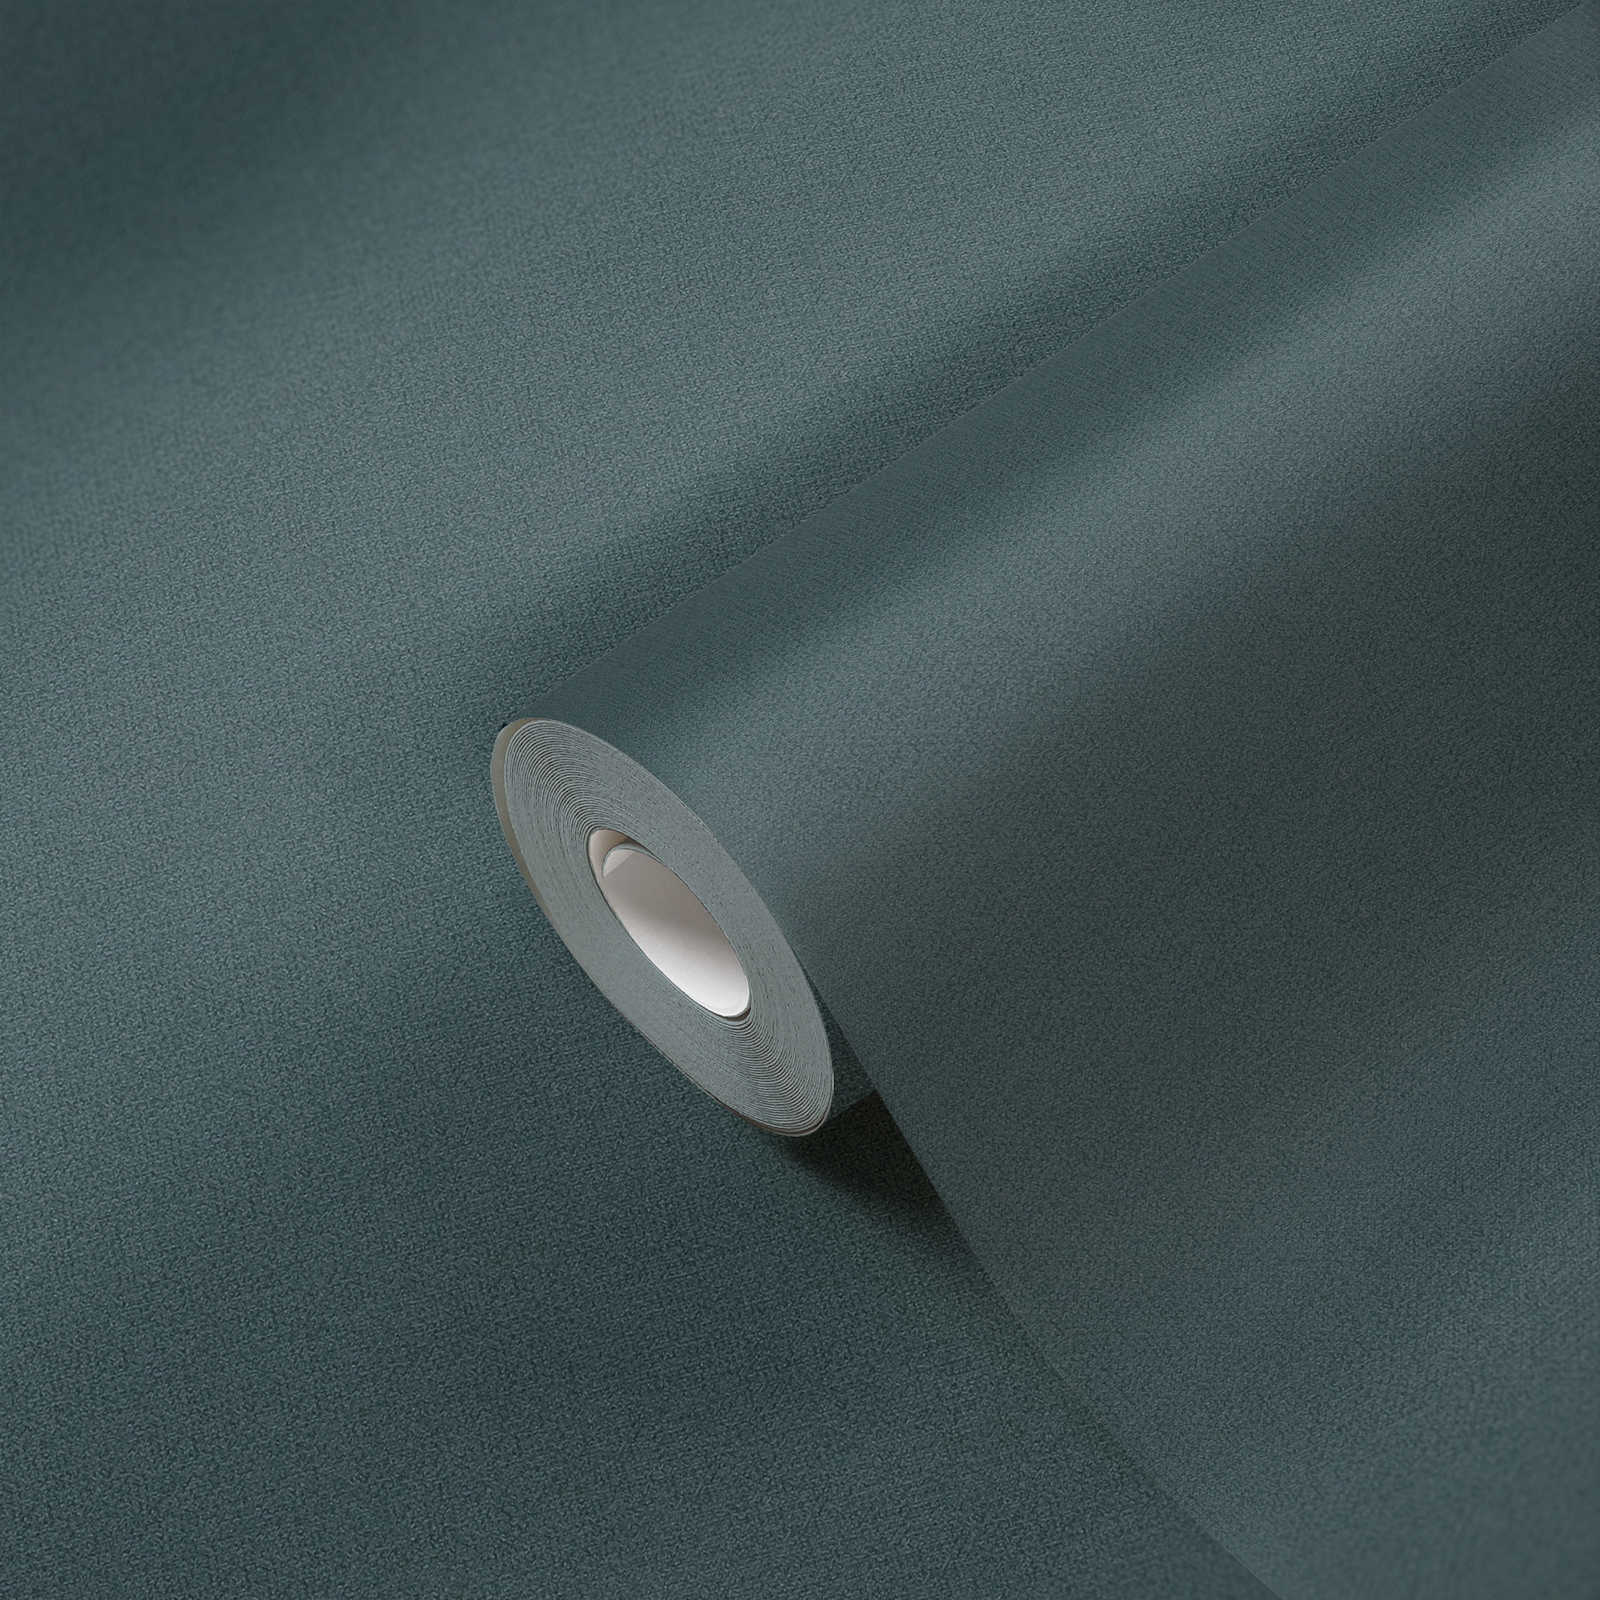             Papel pintado no tejido liso con aspecto de lino Sin PVC - Azul, Gris
        